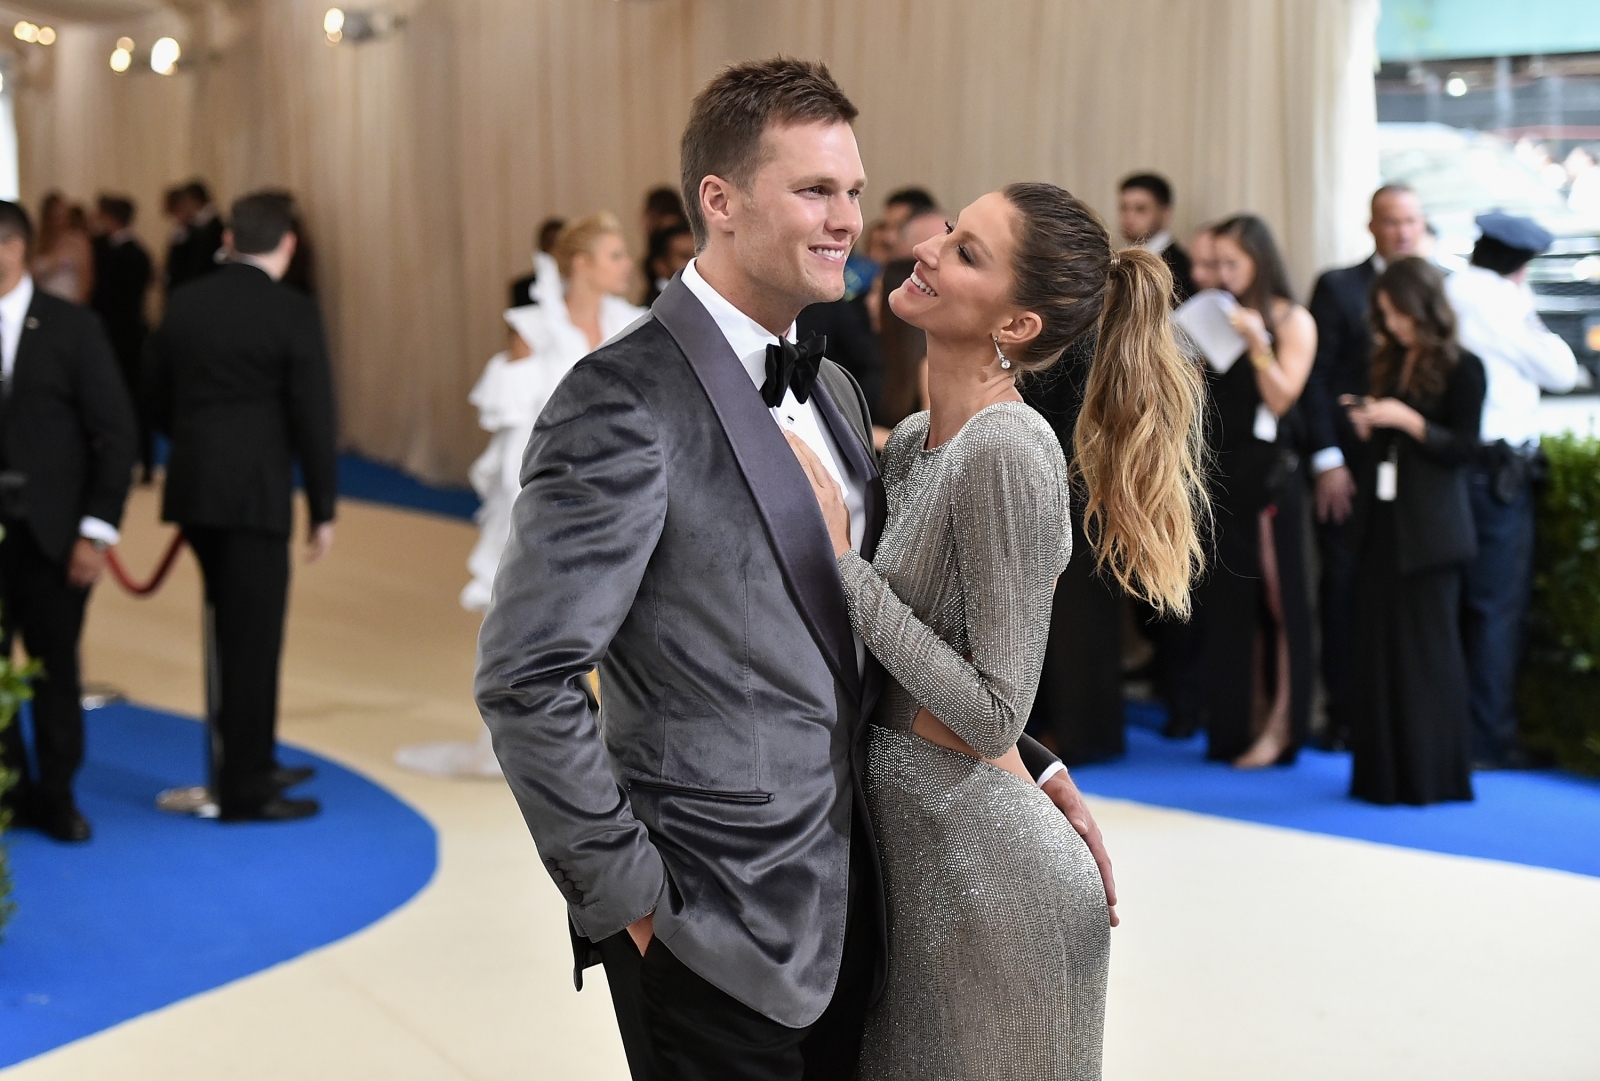 Why Nfl Star Tom Brady Is Avoiding Sex With Supermodel Wife Gisele Bündchen 2465